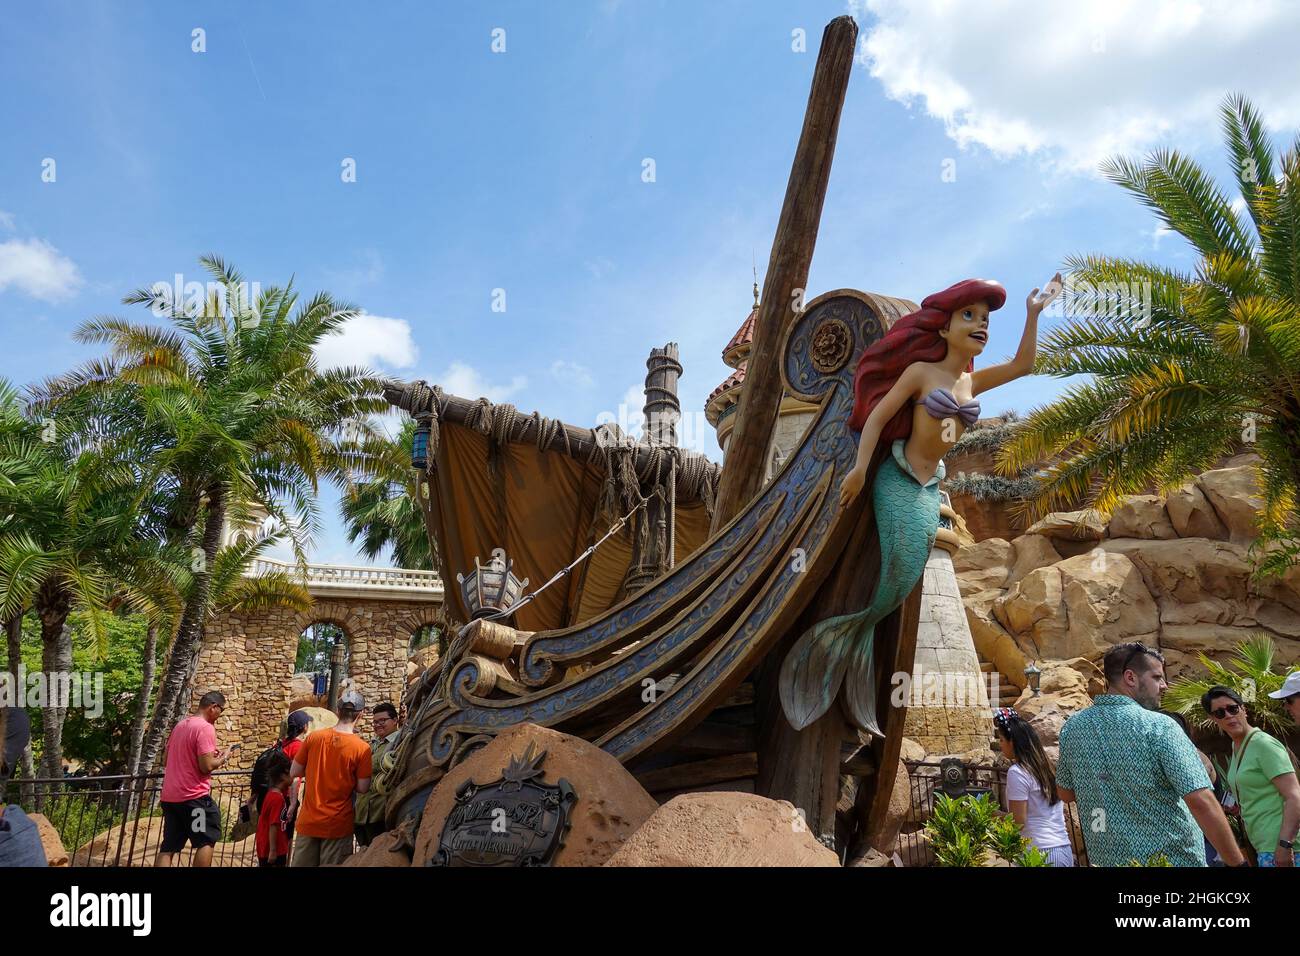 Orlando, FL USA - May 11, 2019: Ariel Grotto Little Mermaid ride at Walt Disney World Magic Kingdom in Orlando, Florida. Stock Photo